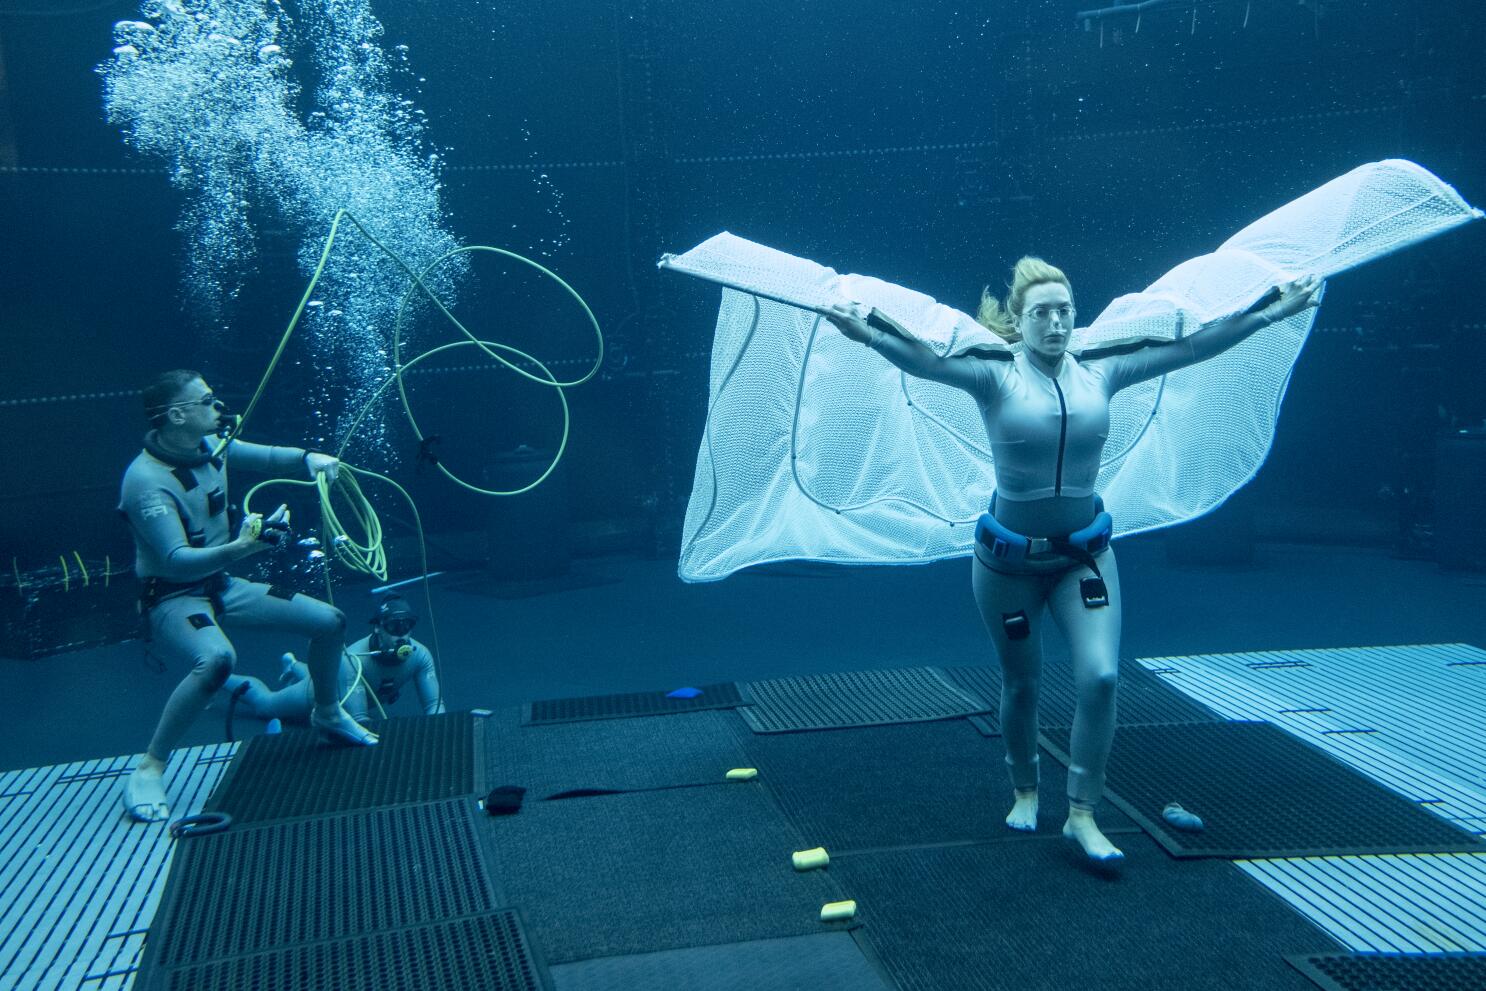 Avatar 2 plot revealed by filmmaker, new snap shows underwater